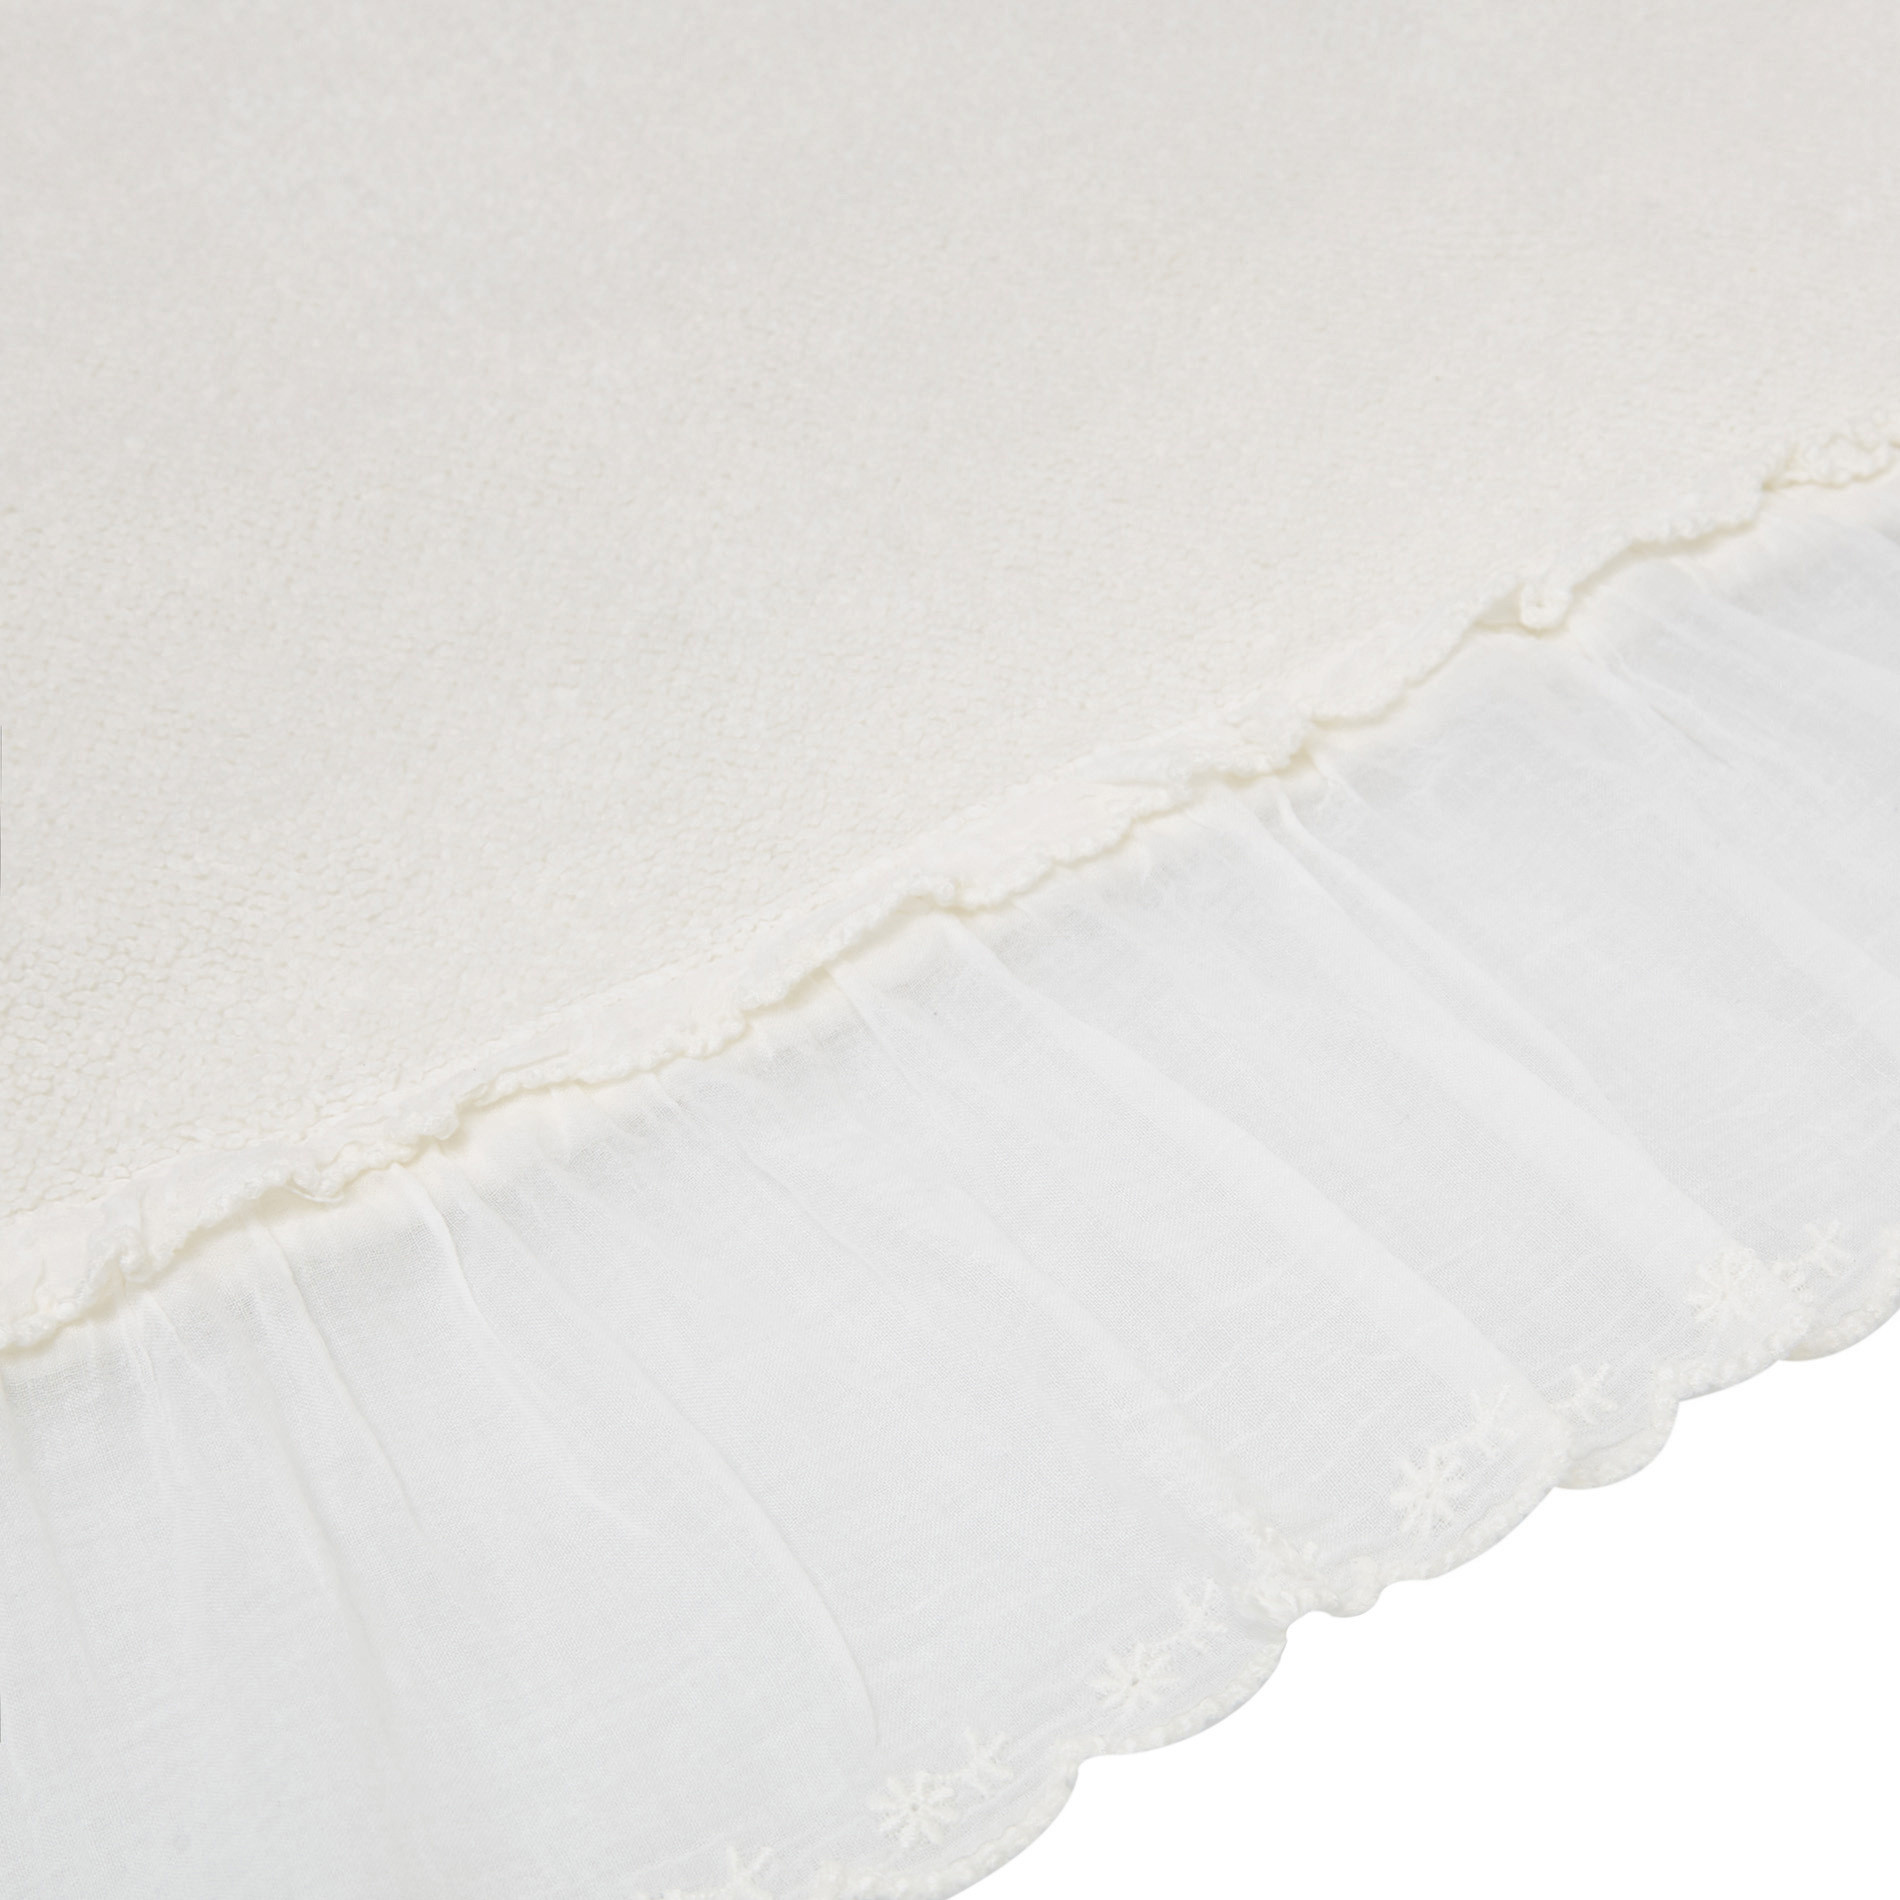 Portofino cotton towel with voile edge, White Cream, large image number 2